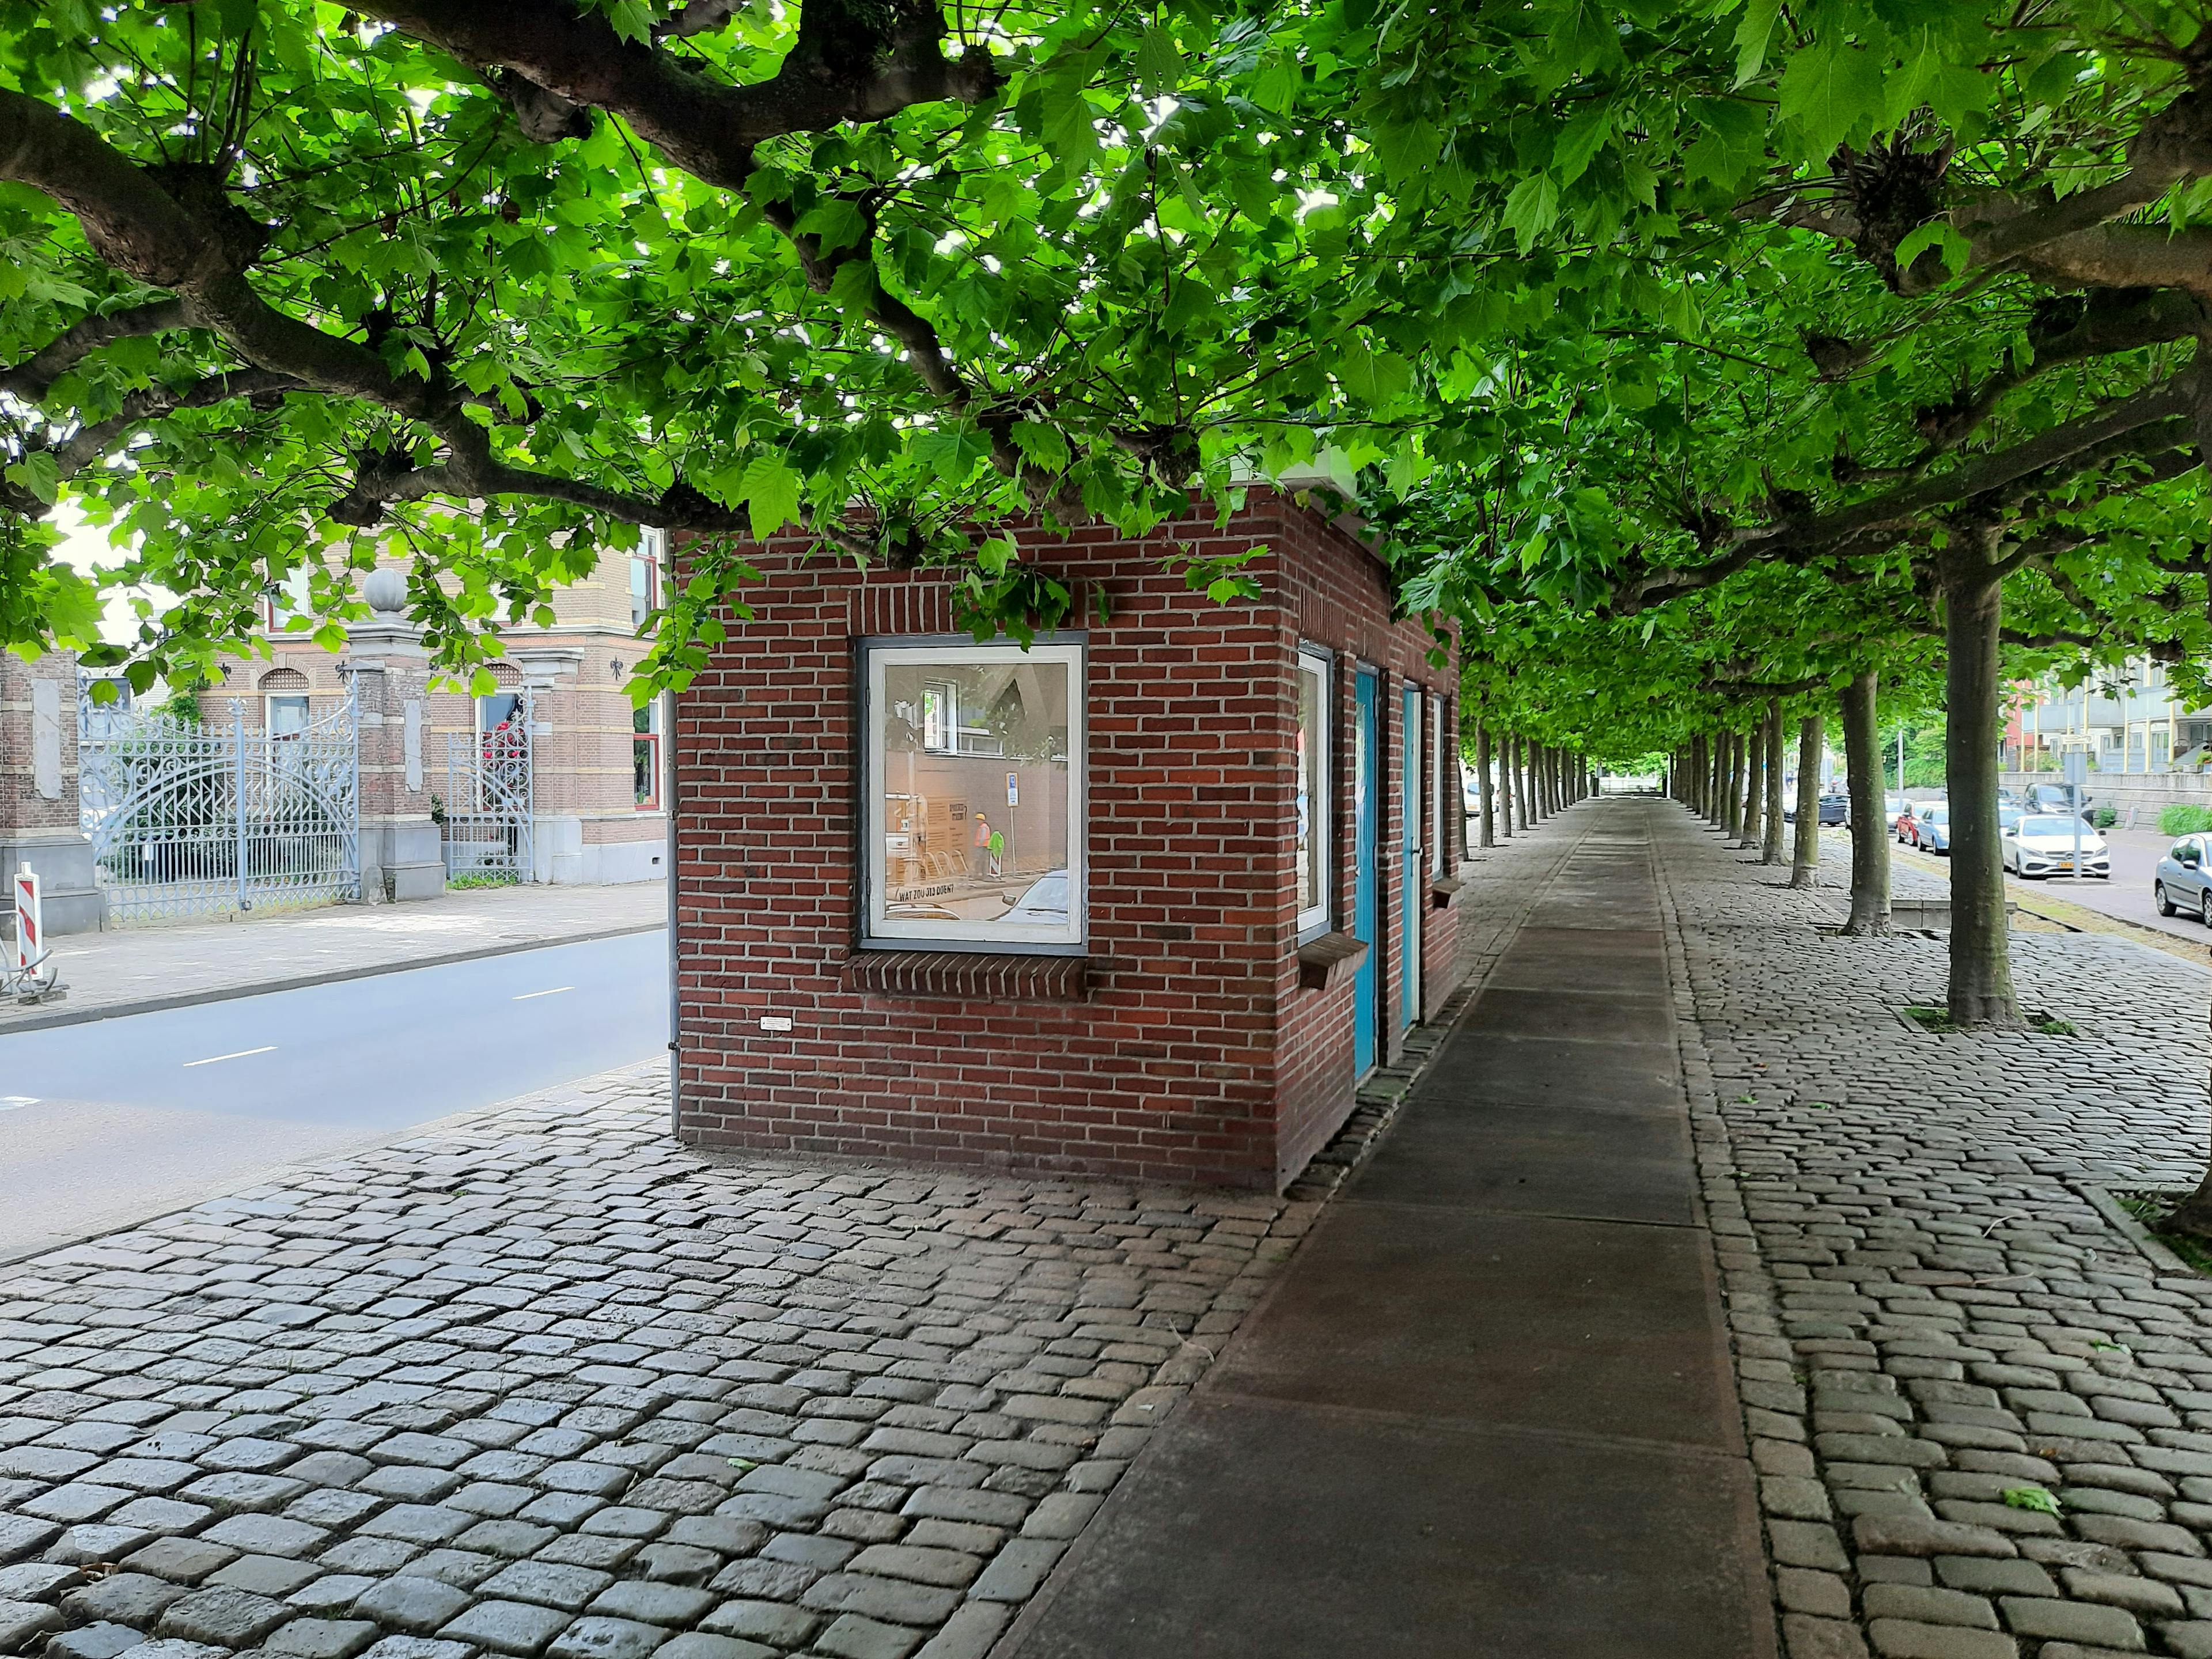 Hedendaagse kunst in het kleinste museum van Nederland